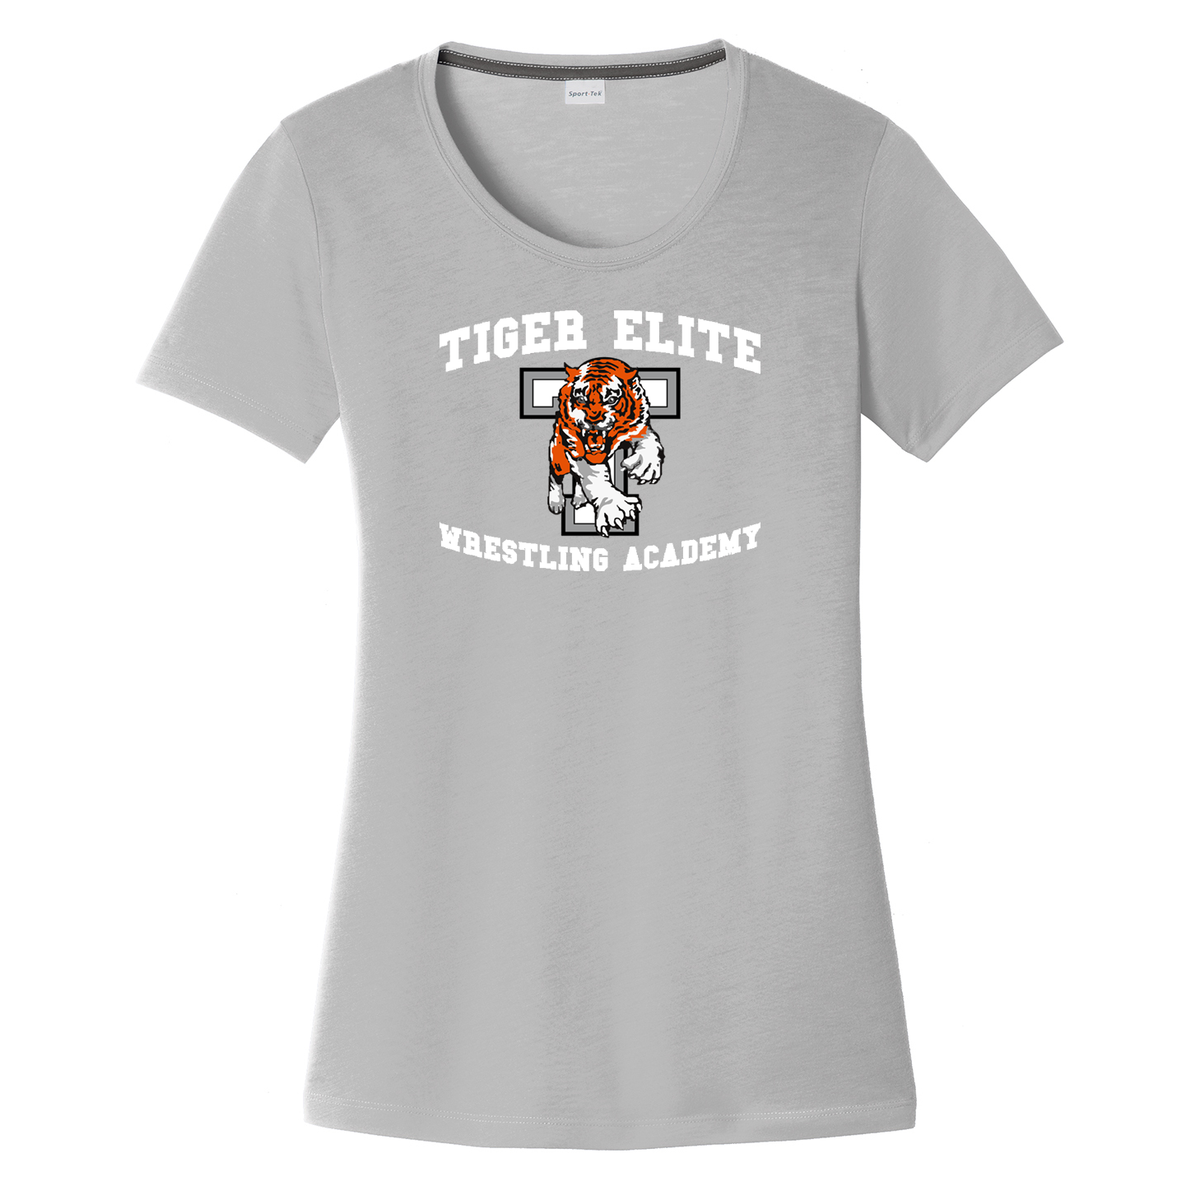 Tiger Elite Wrestling Academy  Women's CottonTouch Performance T-Shirt